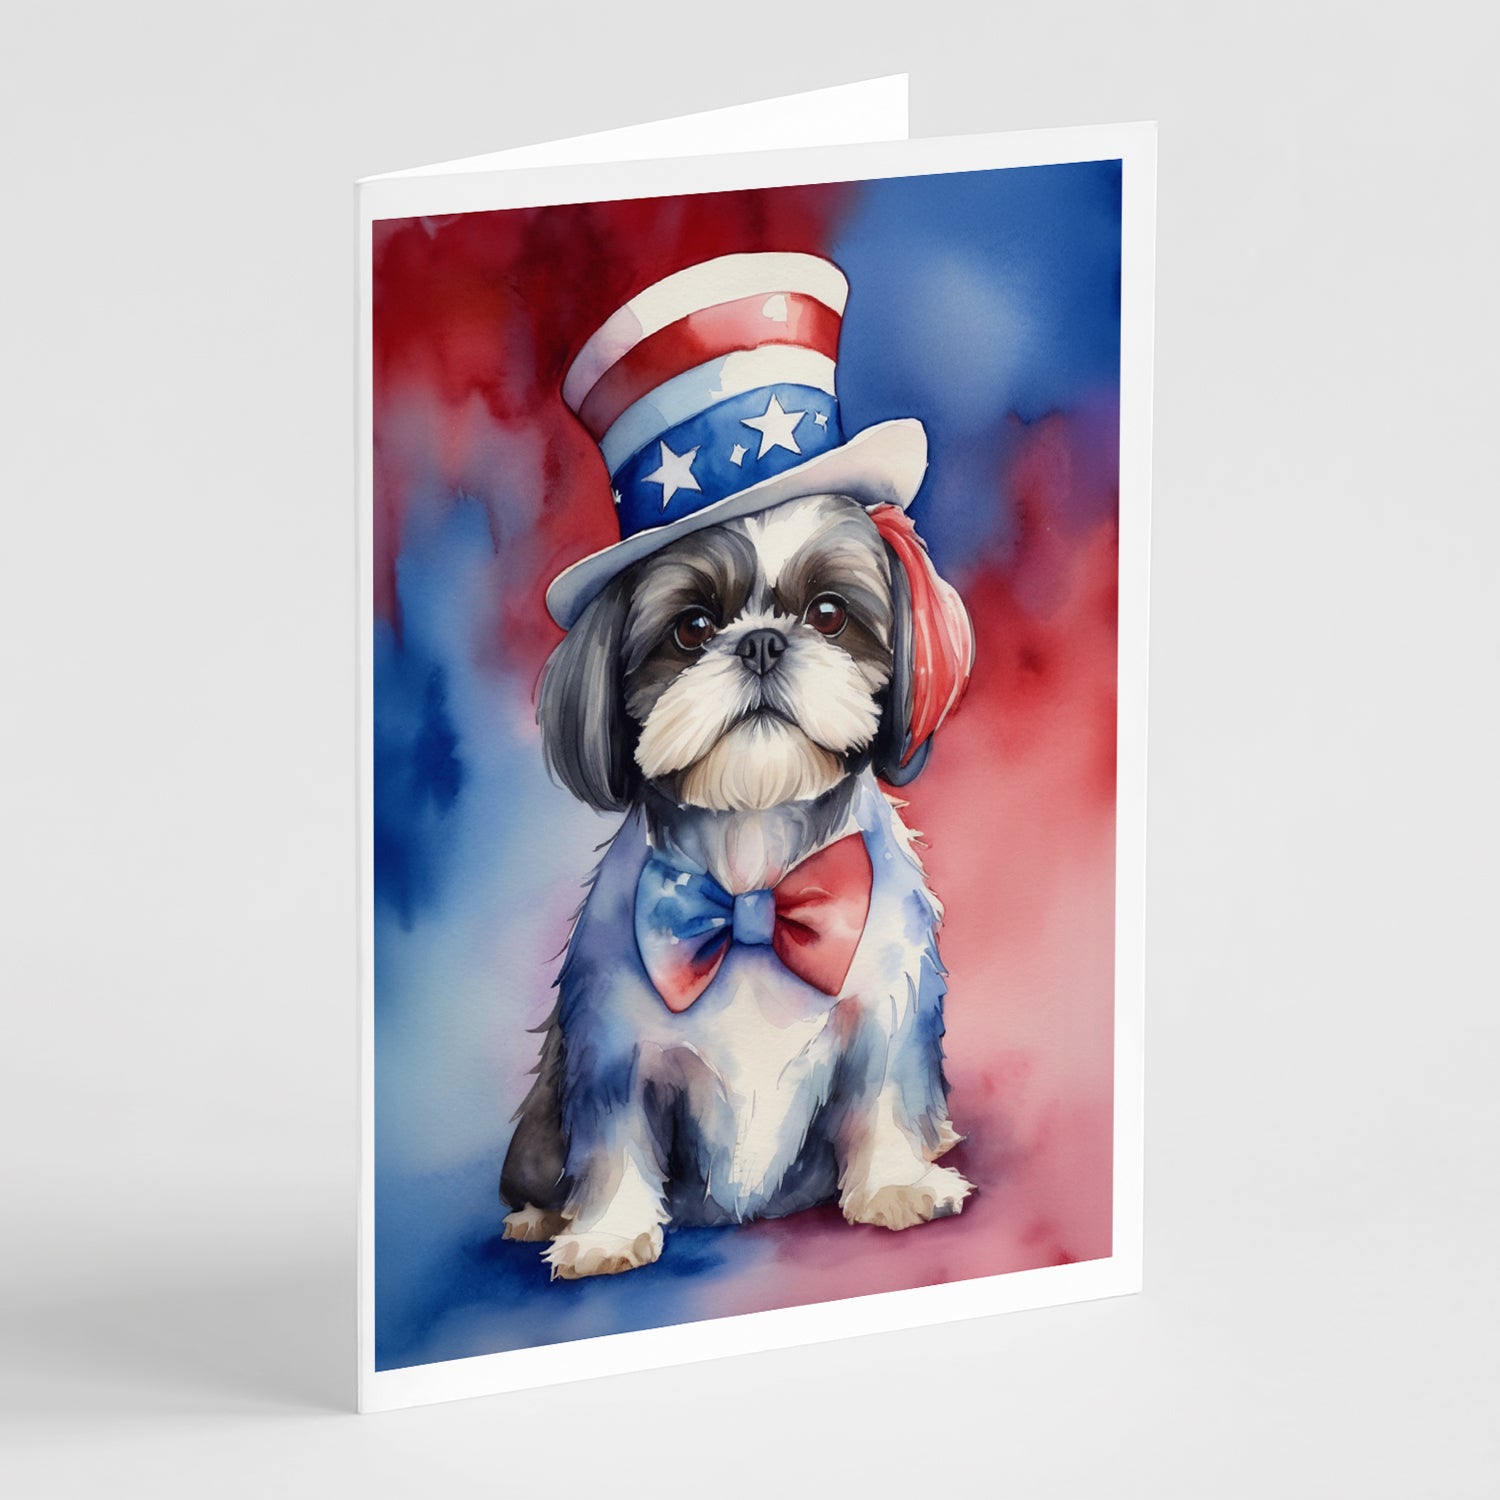 Buy this Shih Tzu Patriotic American Greeting Cards Pack of 8